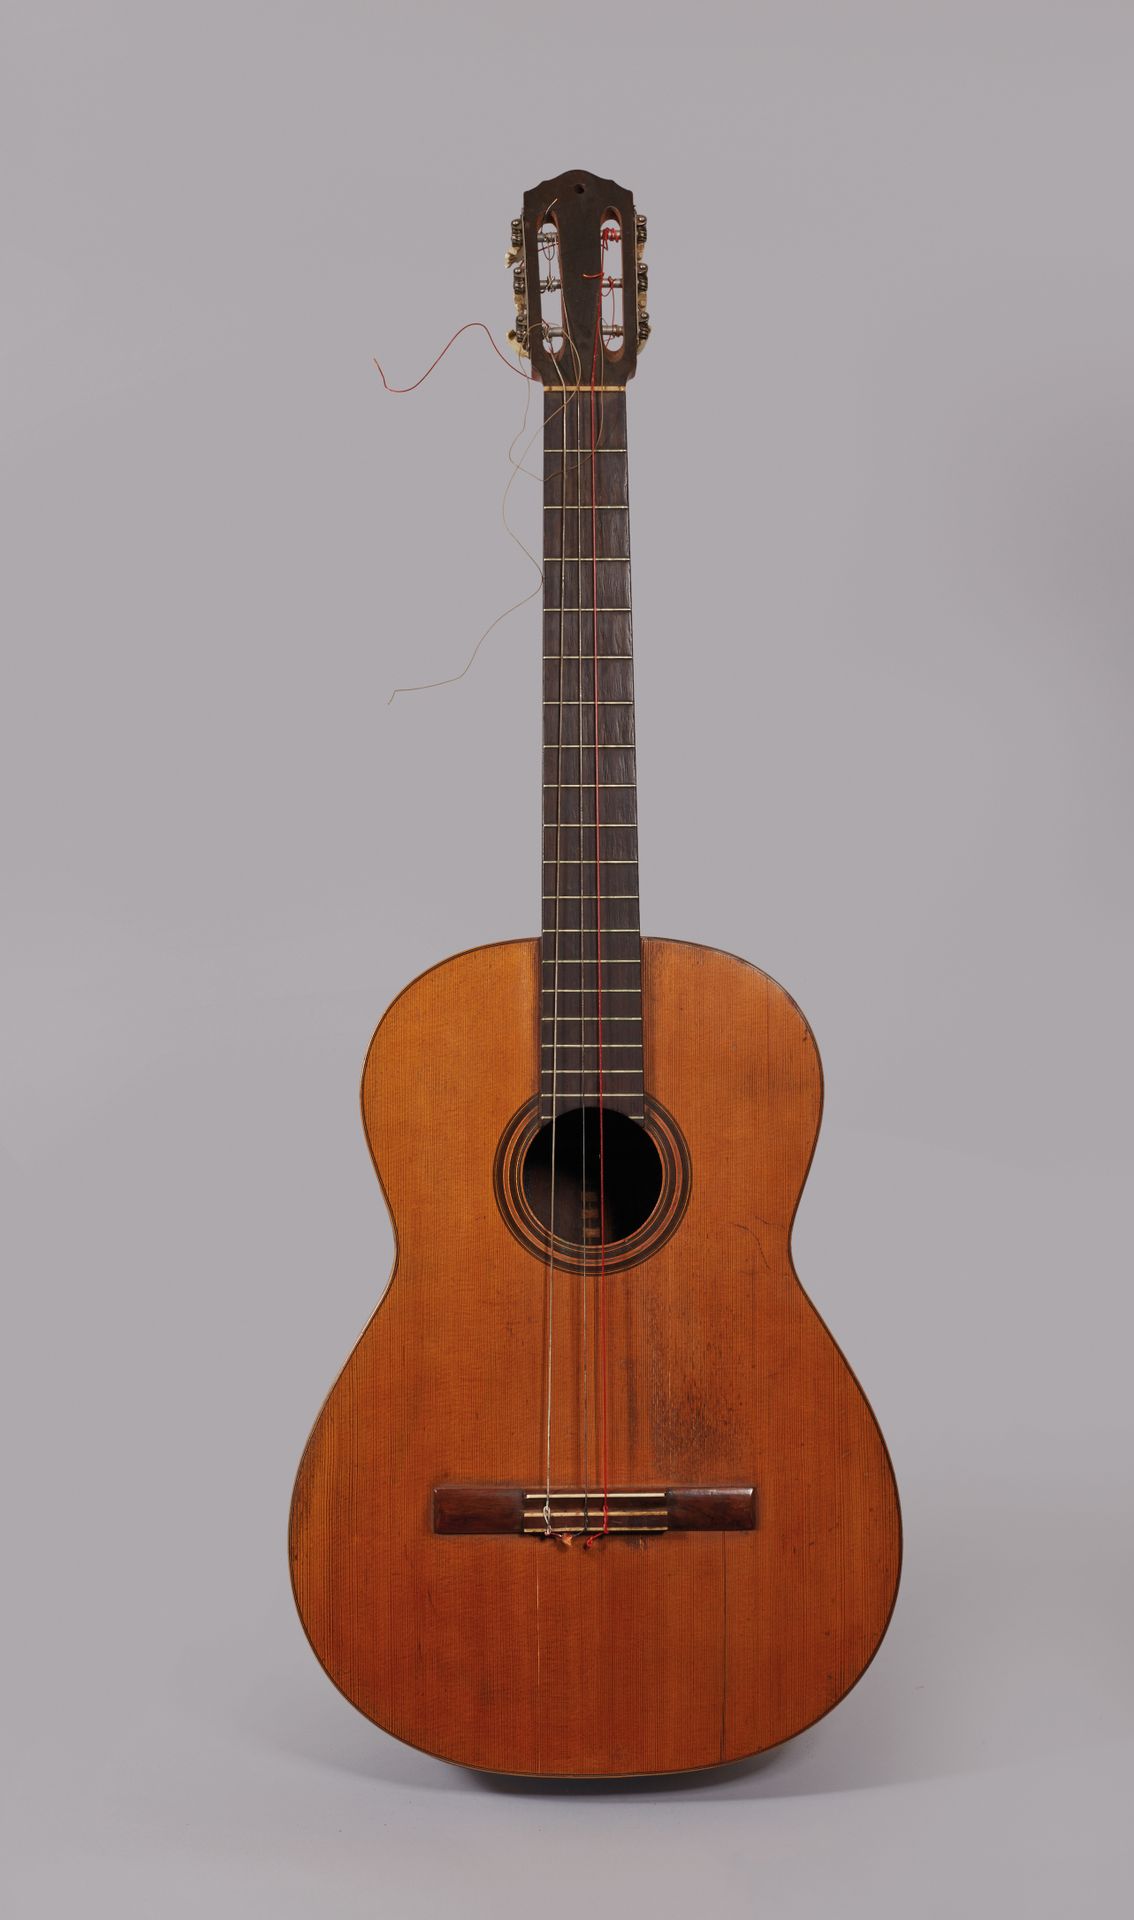 Null Guitarra clásica de Manuel RAMIREZ, cosecha 1900 en Madrid.

Está escrito e&hellip;